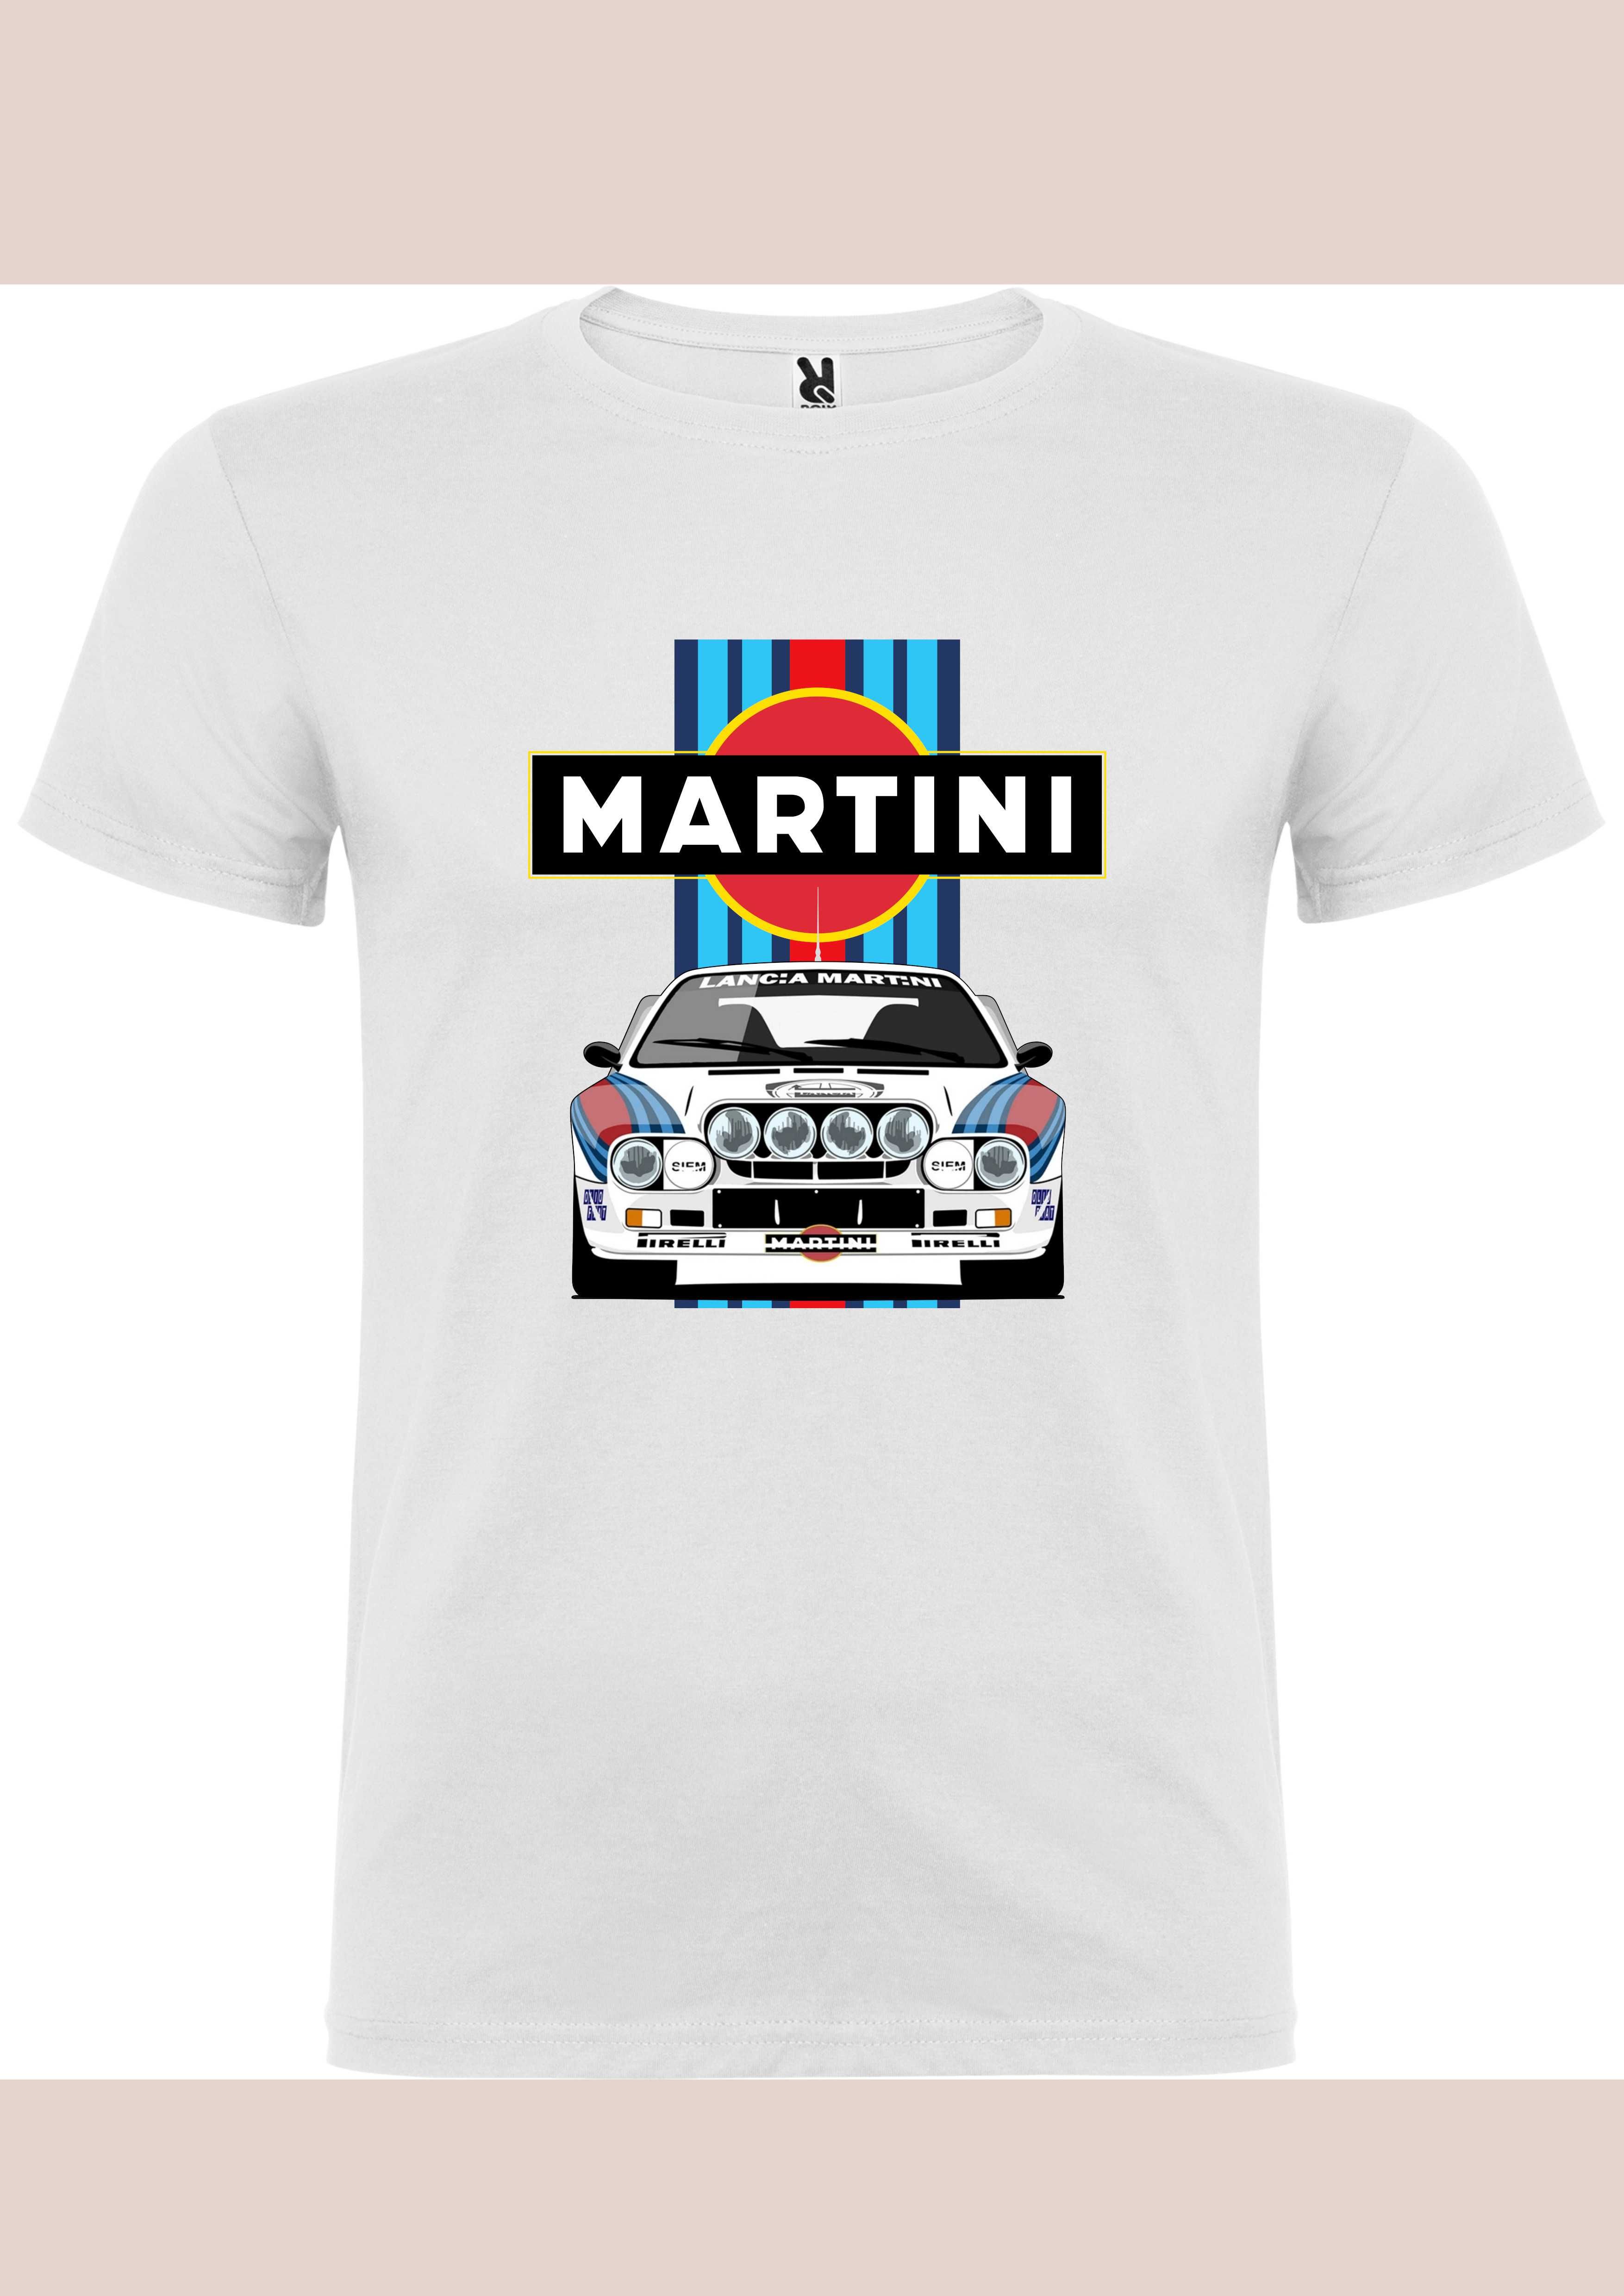 T-shirt Lancia 037 Martini logo group B Rally car